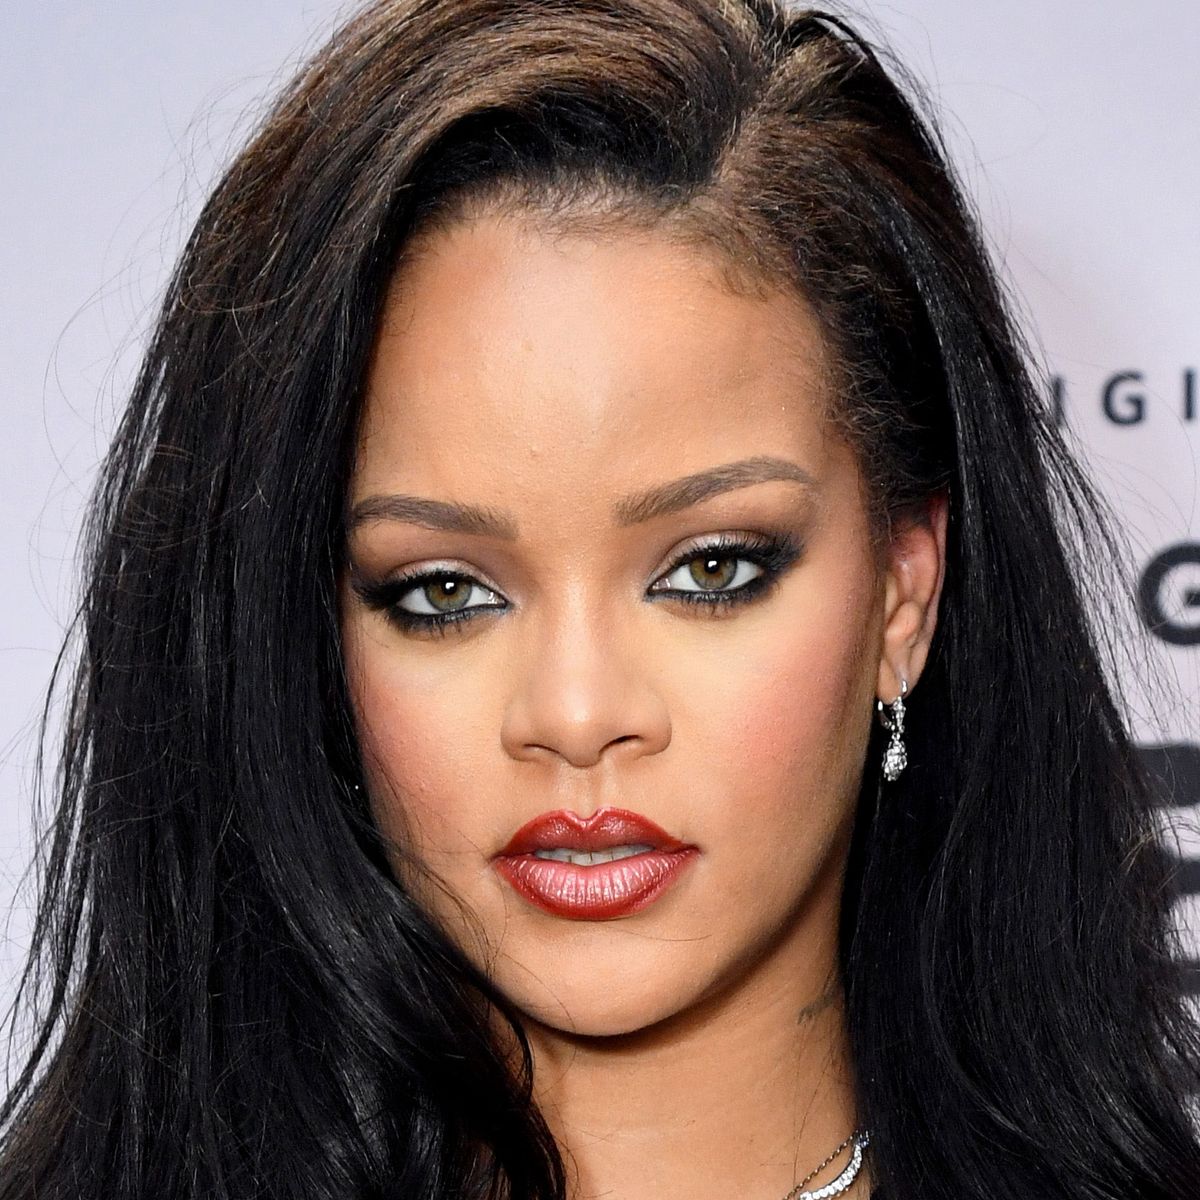 Rihanna : Born in saint michael and raised in bridgetown, barbados.